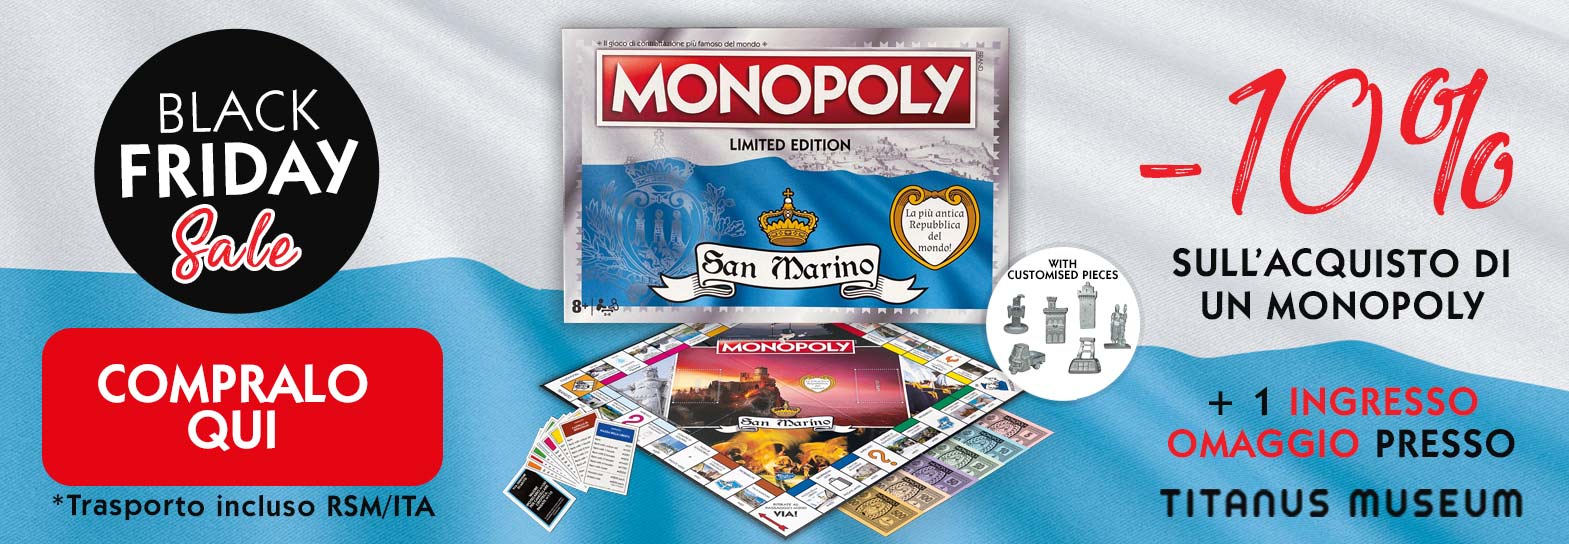 monopoly-banner-sito-black-friday-ita-1